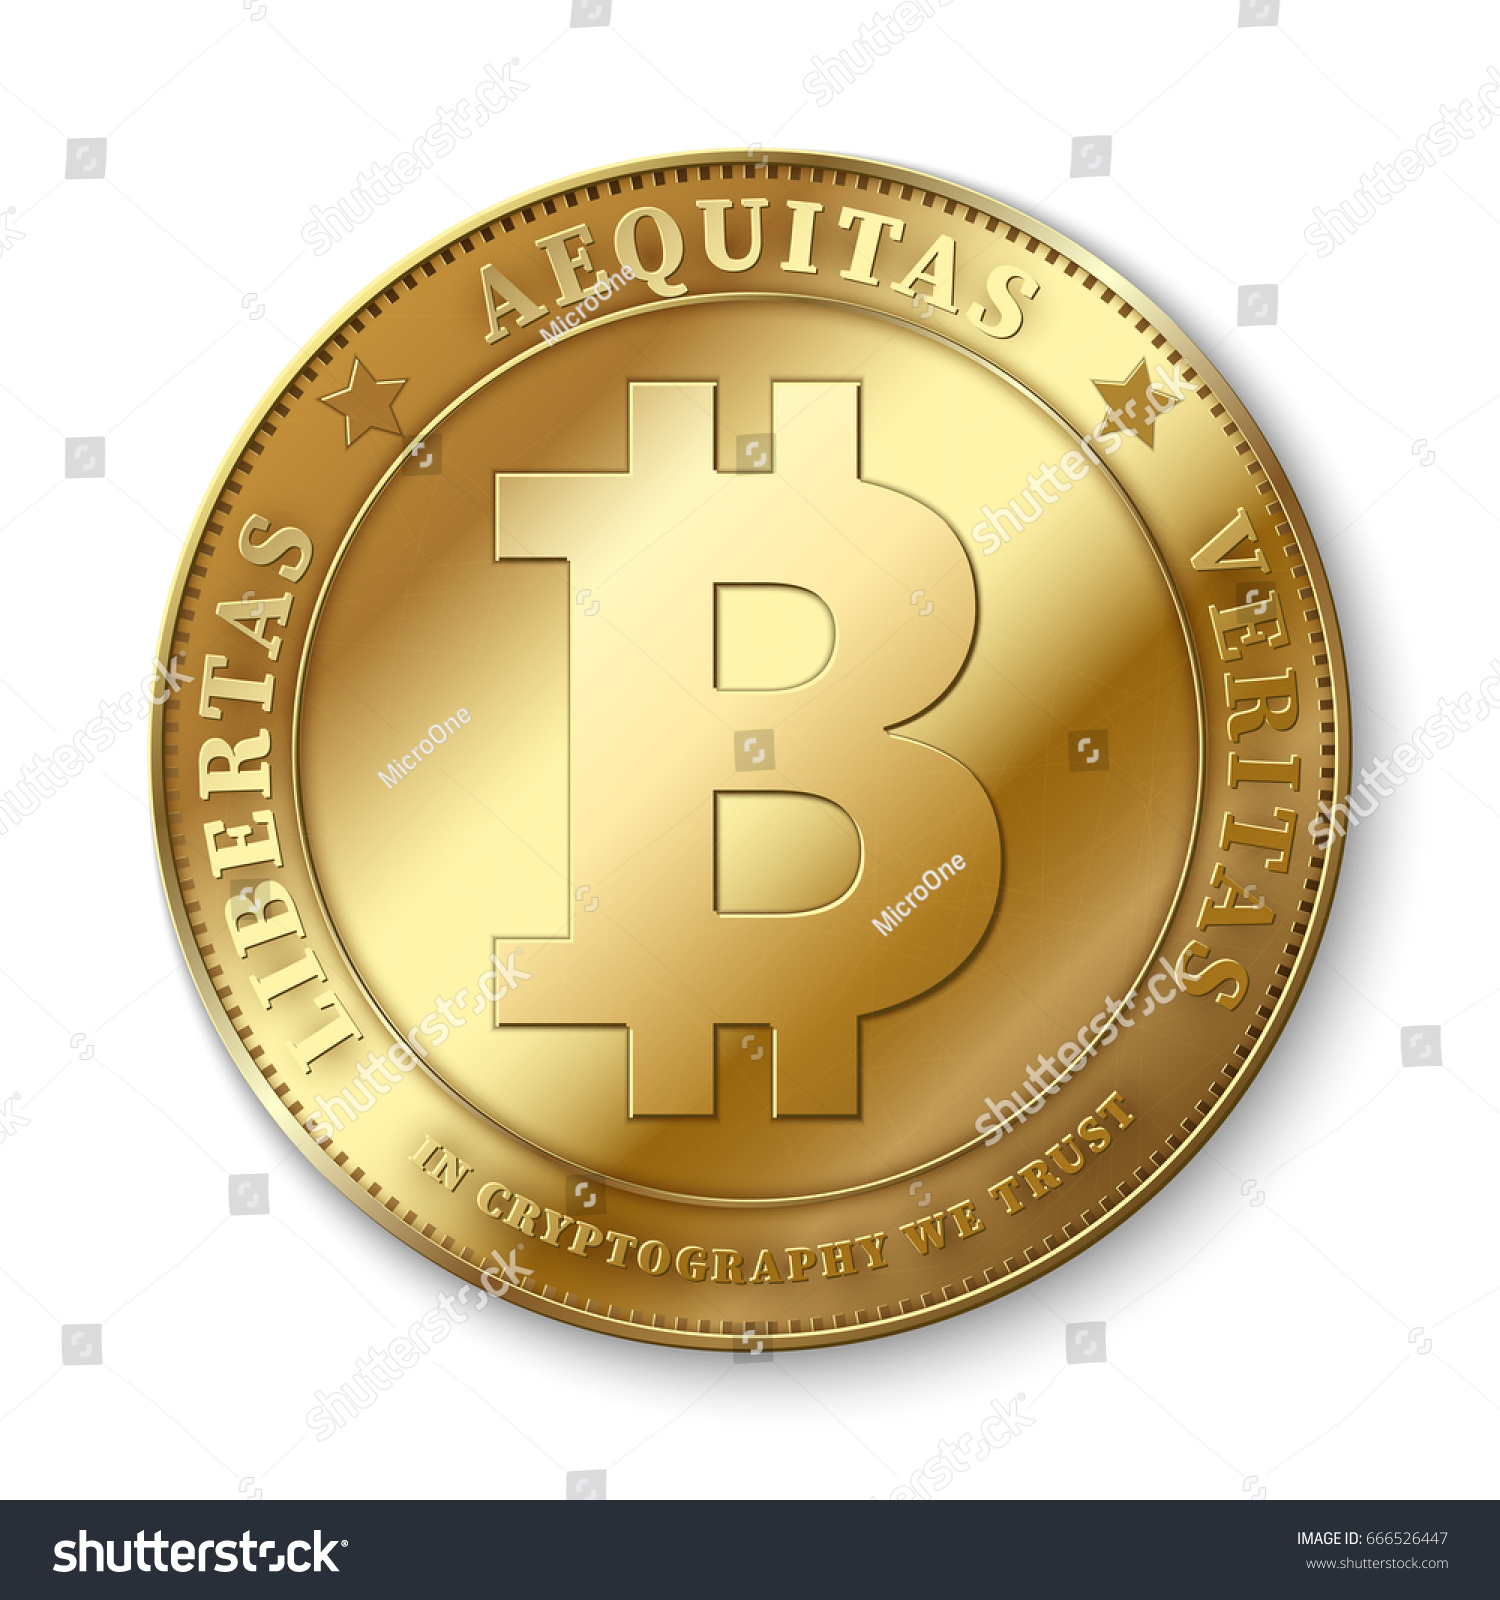 SVG of Realistic 3d golden bitcoin coin vector illustration for fintech net banking and blockchain concept. Golden bitcoin money, internet finance coin svg